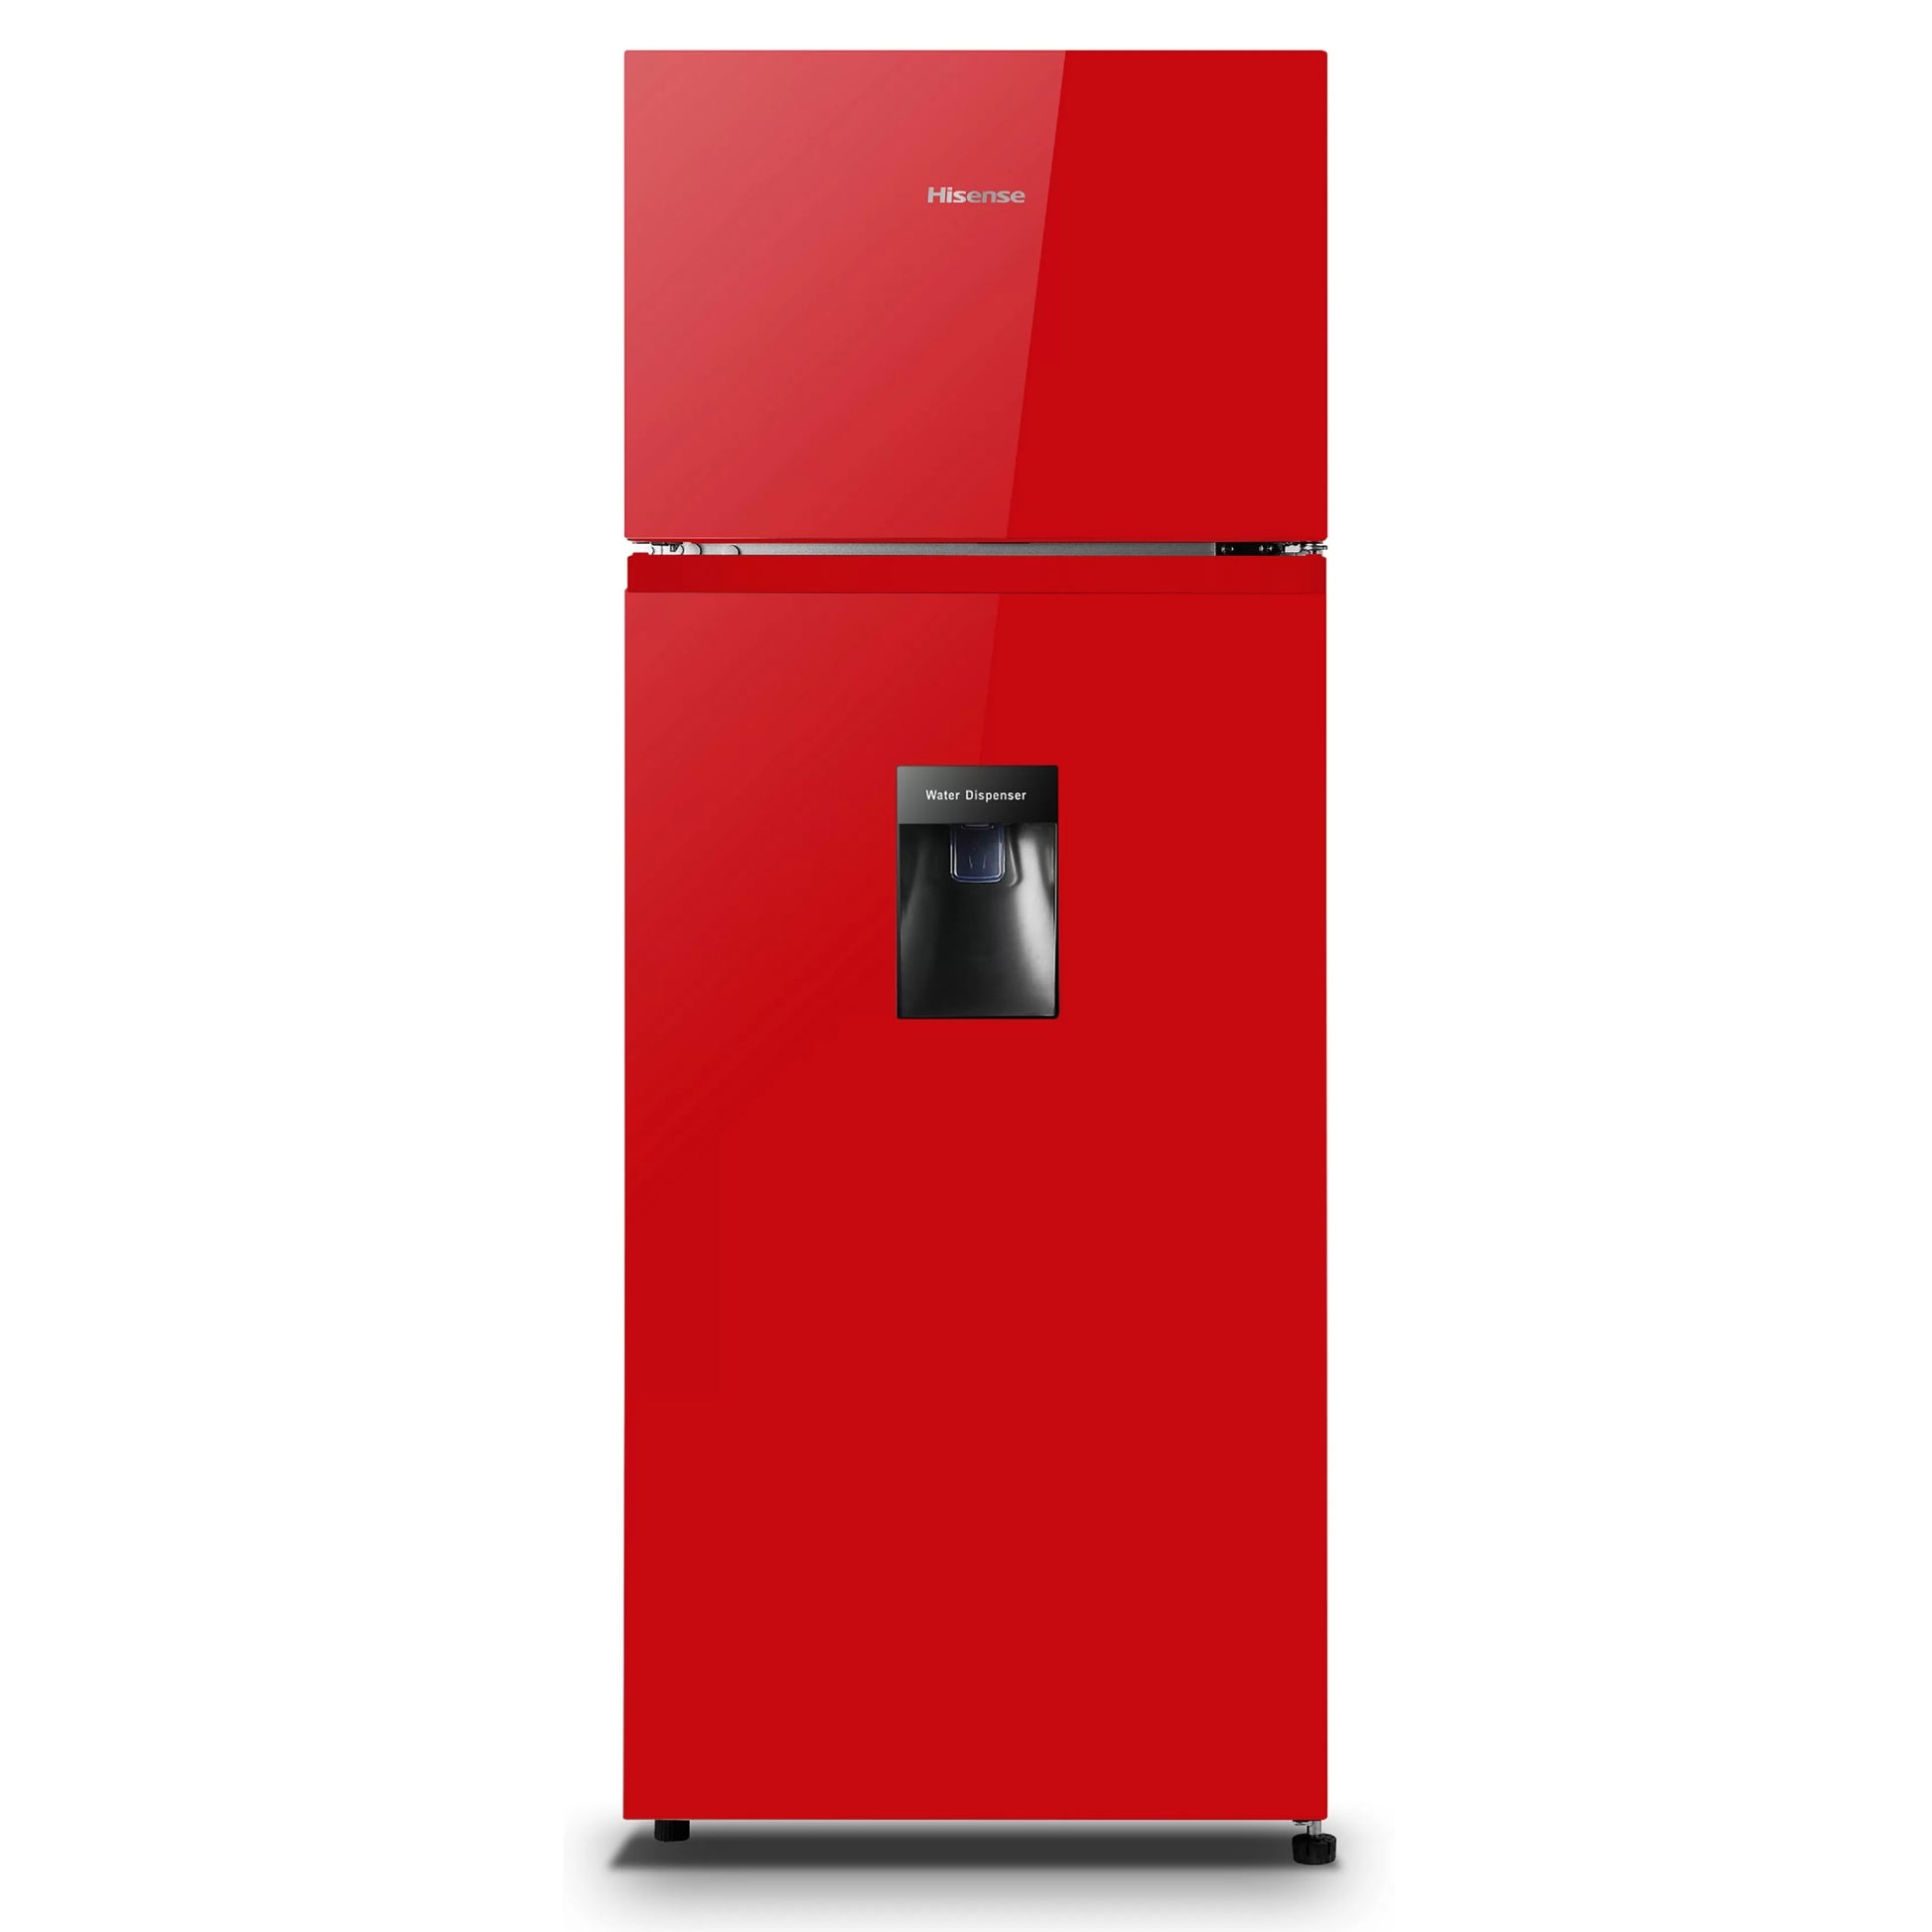 Hisense 200L Red Double Door Refrigerator - REF 205 DRB